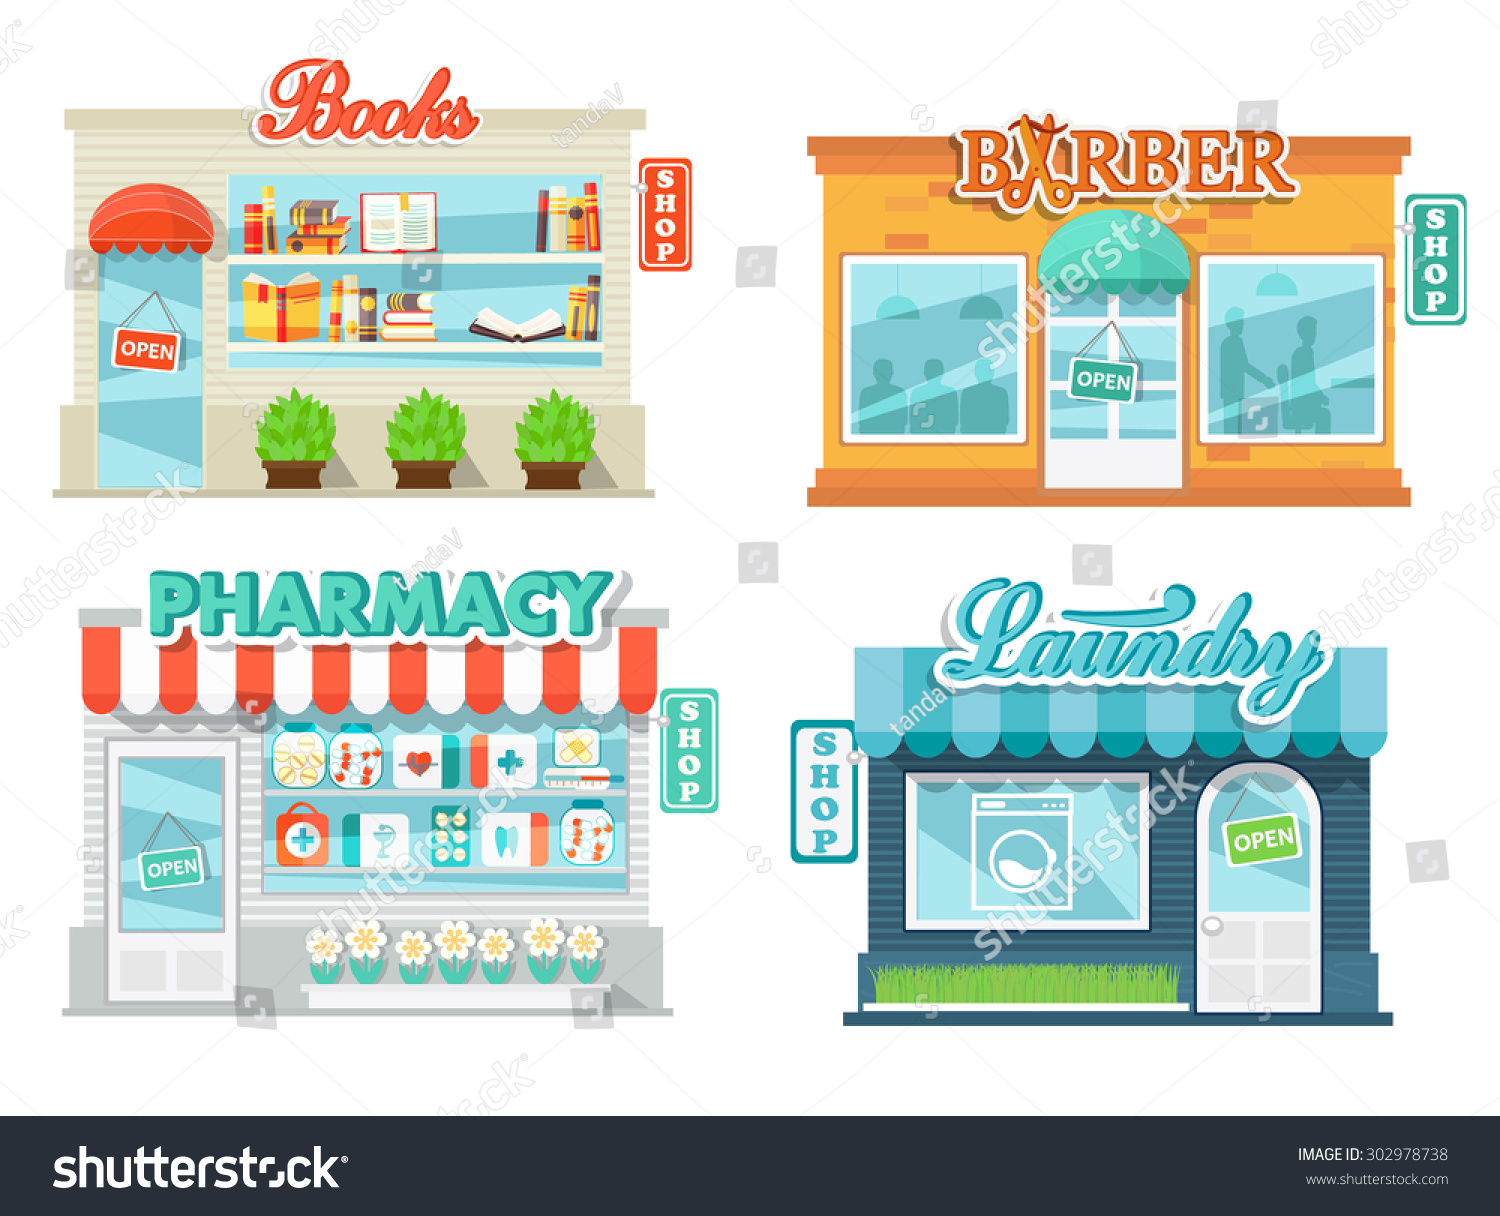 pharmacy building clipart - photo #31